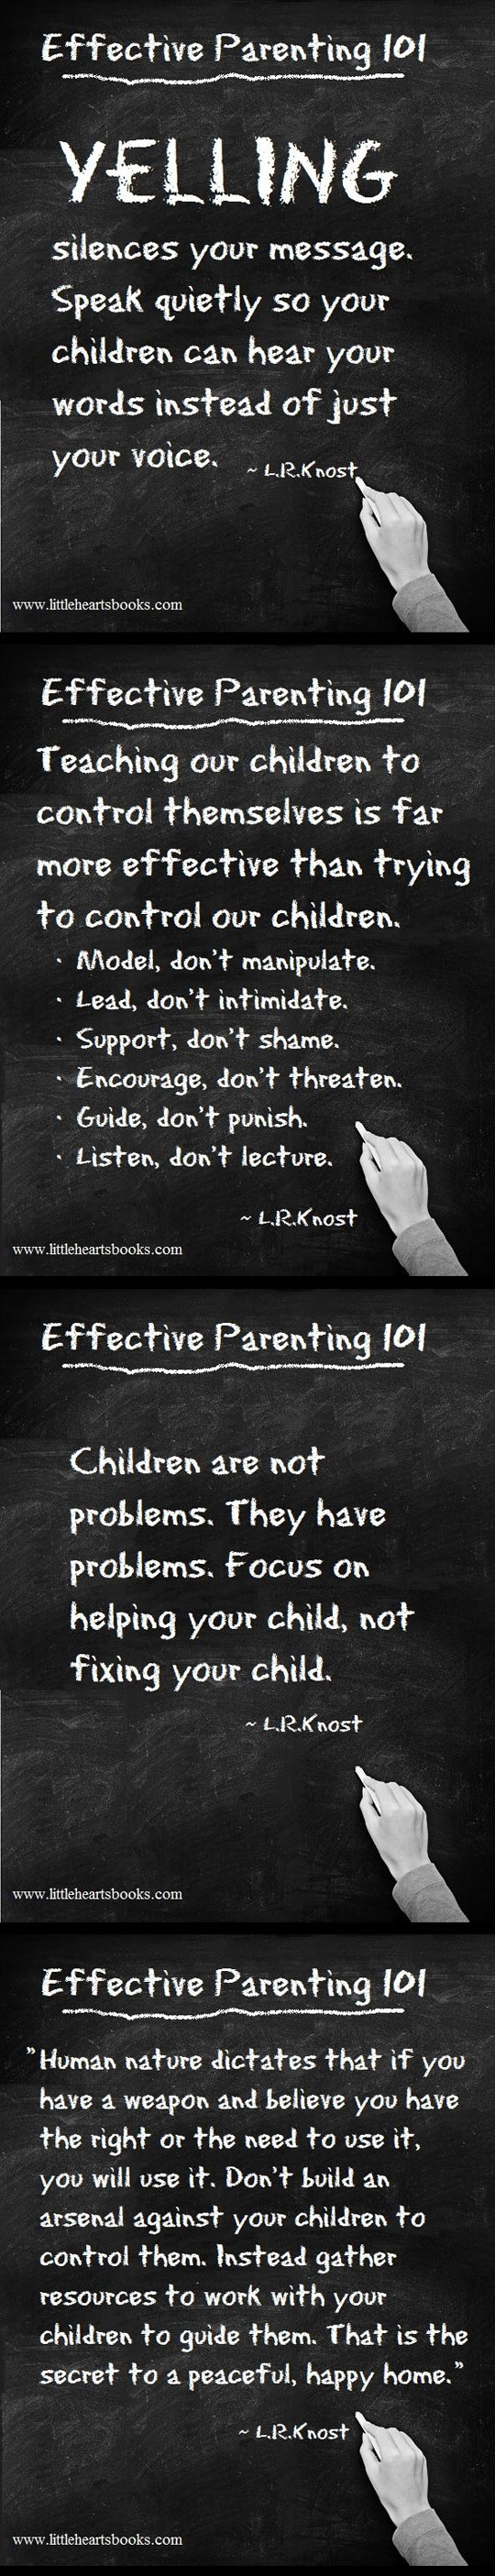 Effective Parenting 101